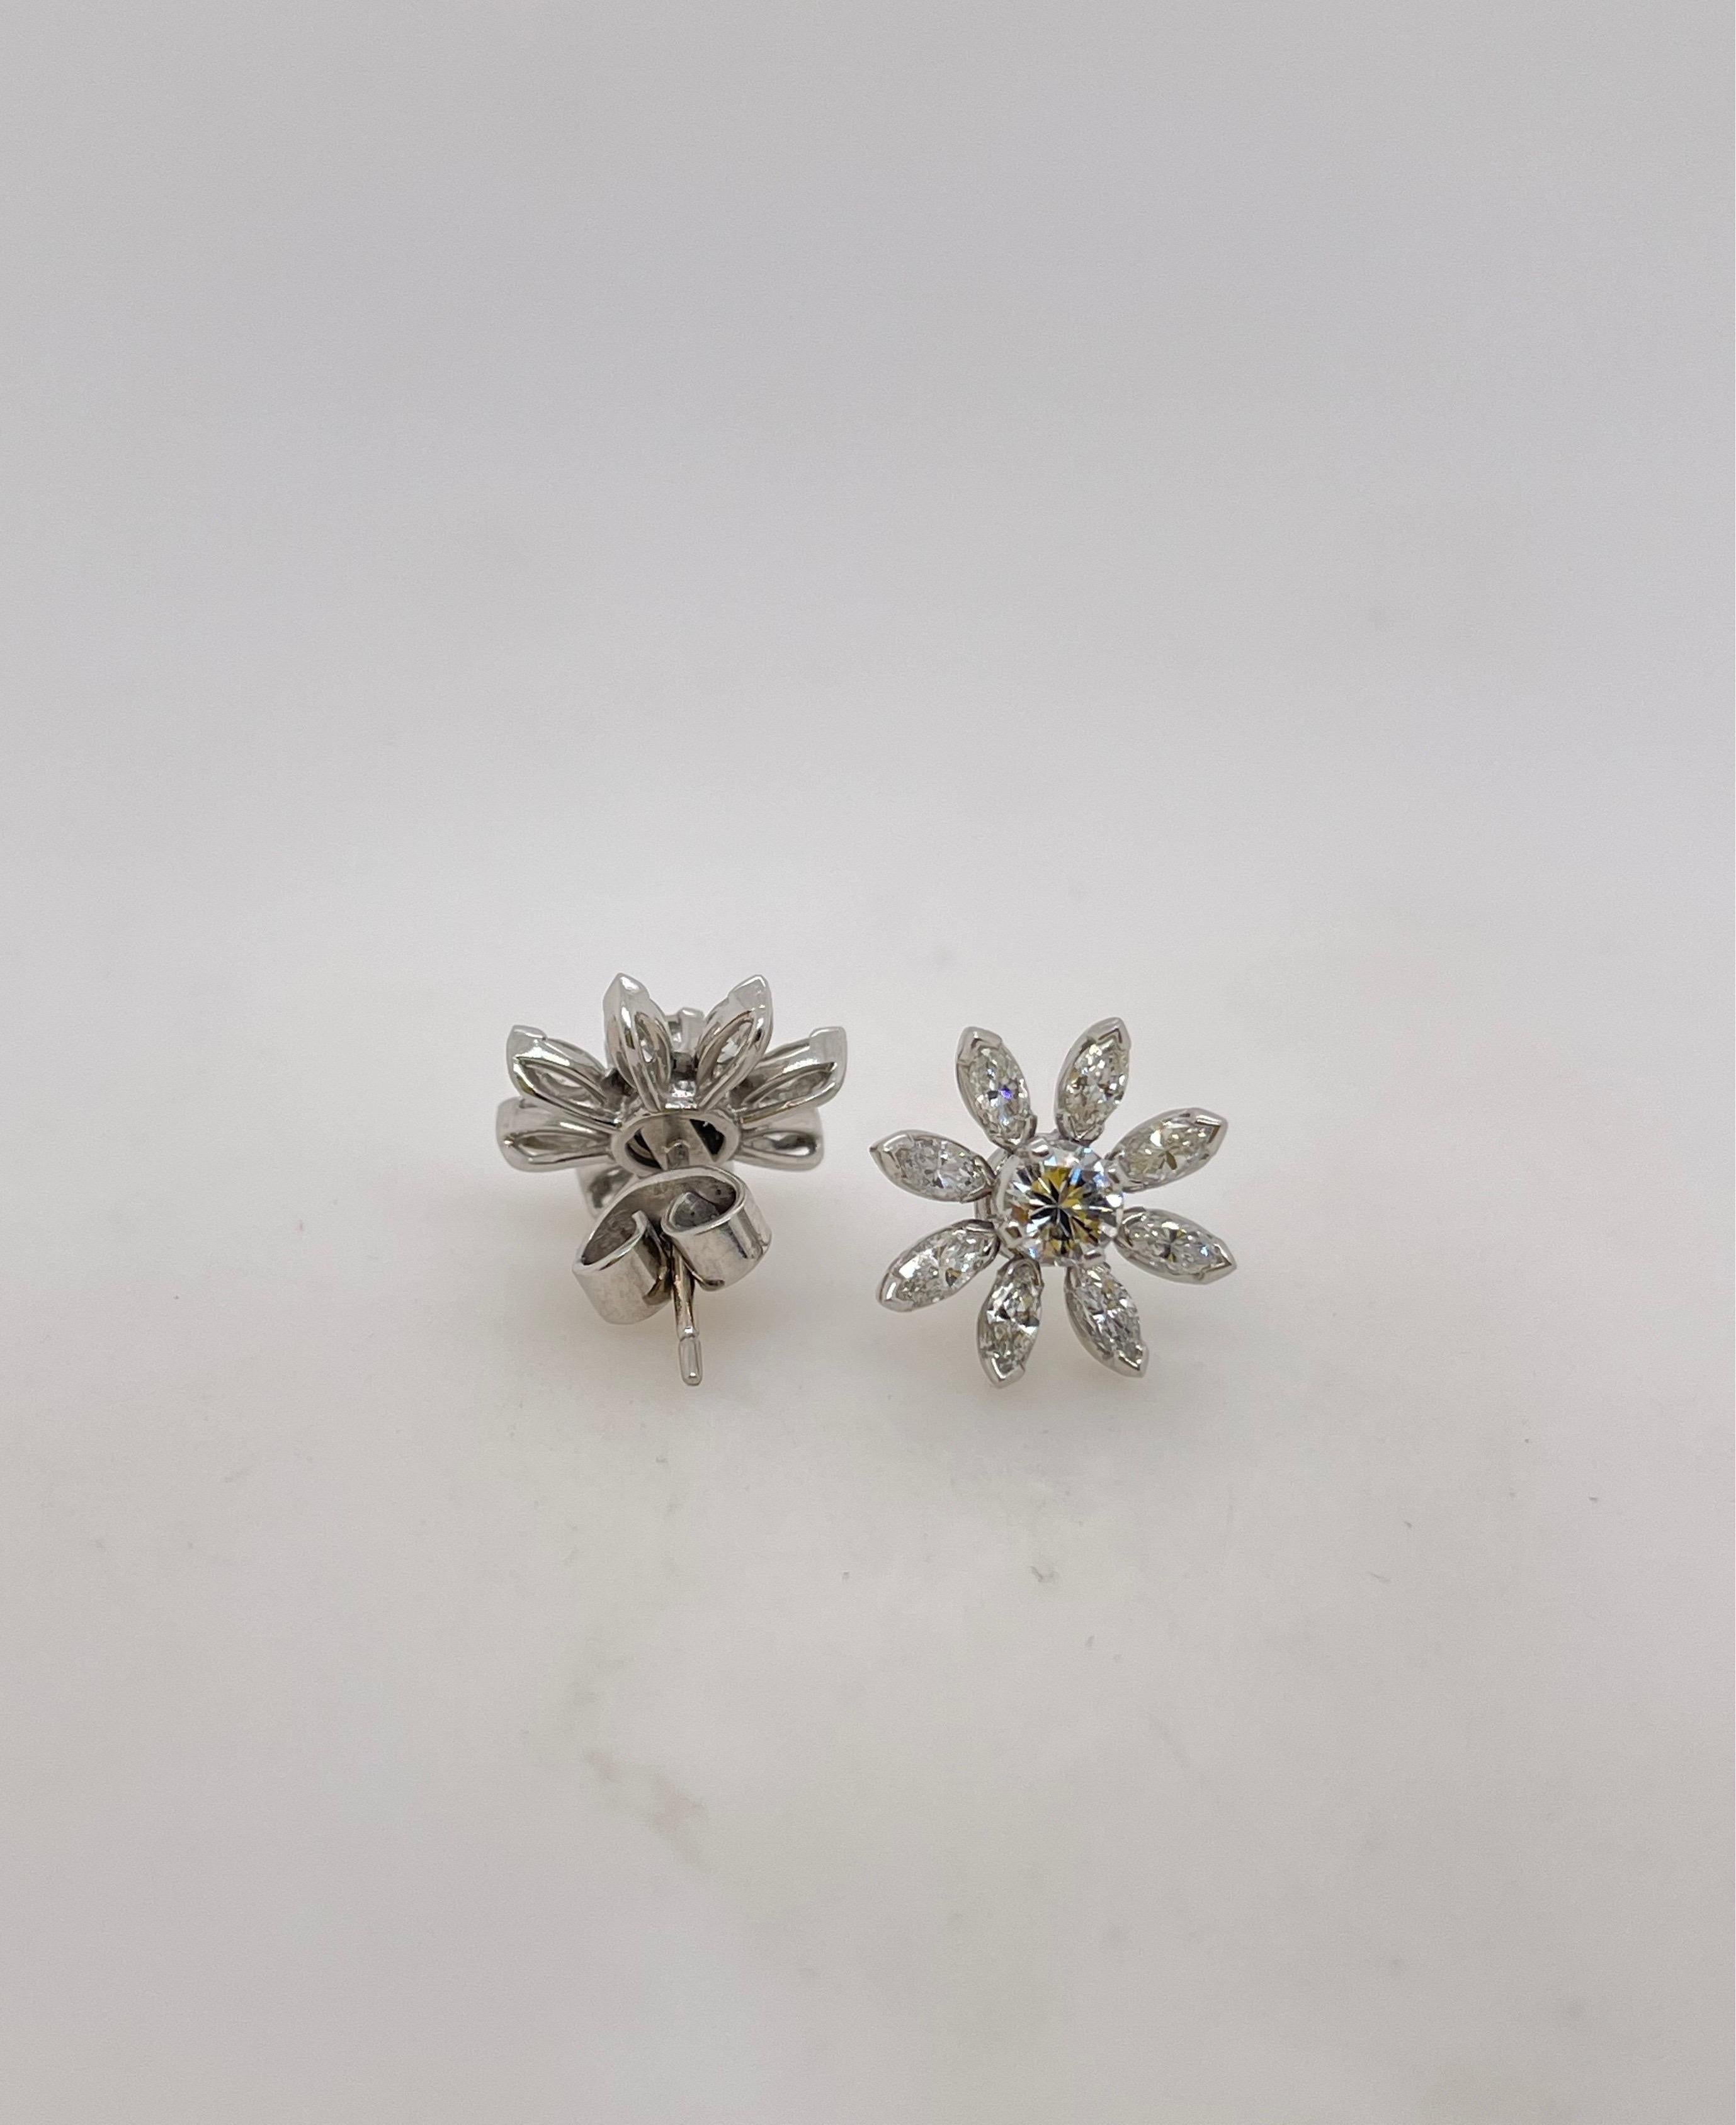 White Gold Marquise & Round Diamond Flower Stud Earrings
Platinum 
2 round diamonds= .58ct VS1 H-1
16 marquise= 1.05ct 
